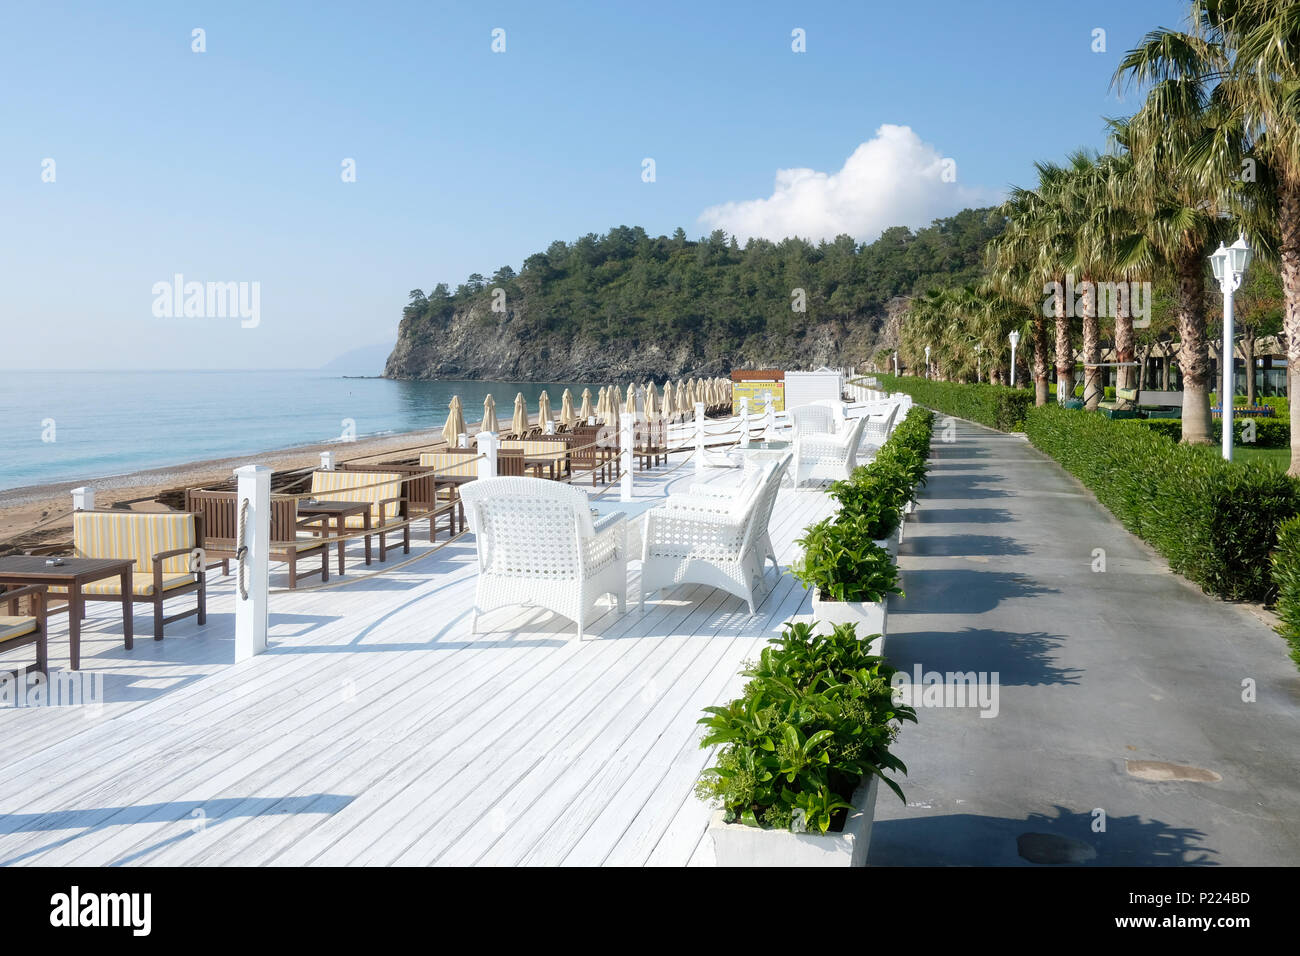 The popular resort Amara Dolce Vita Luxury Hotel Stock Photo